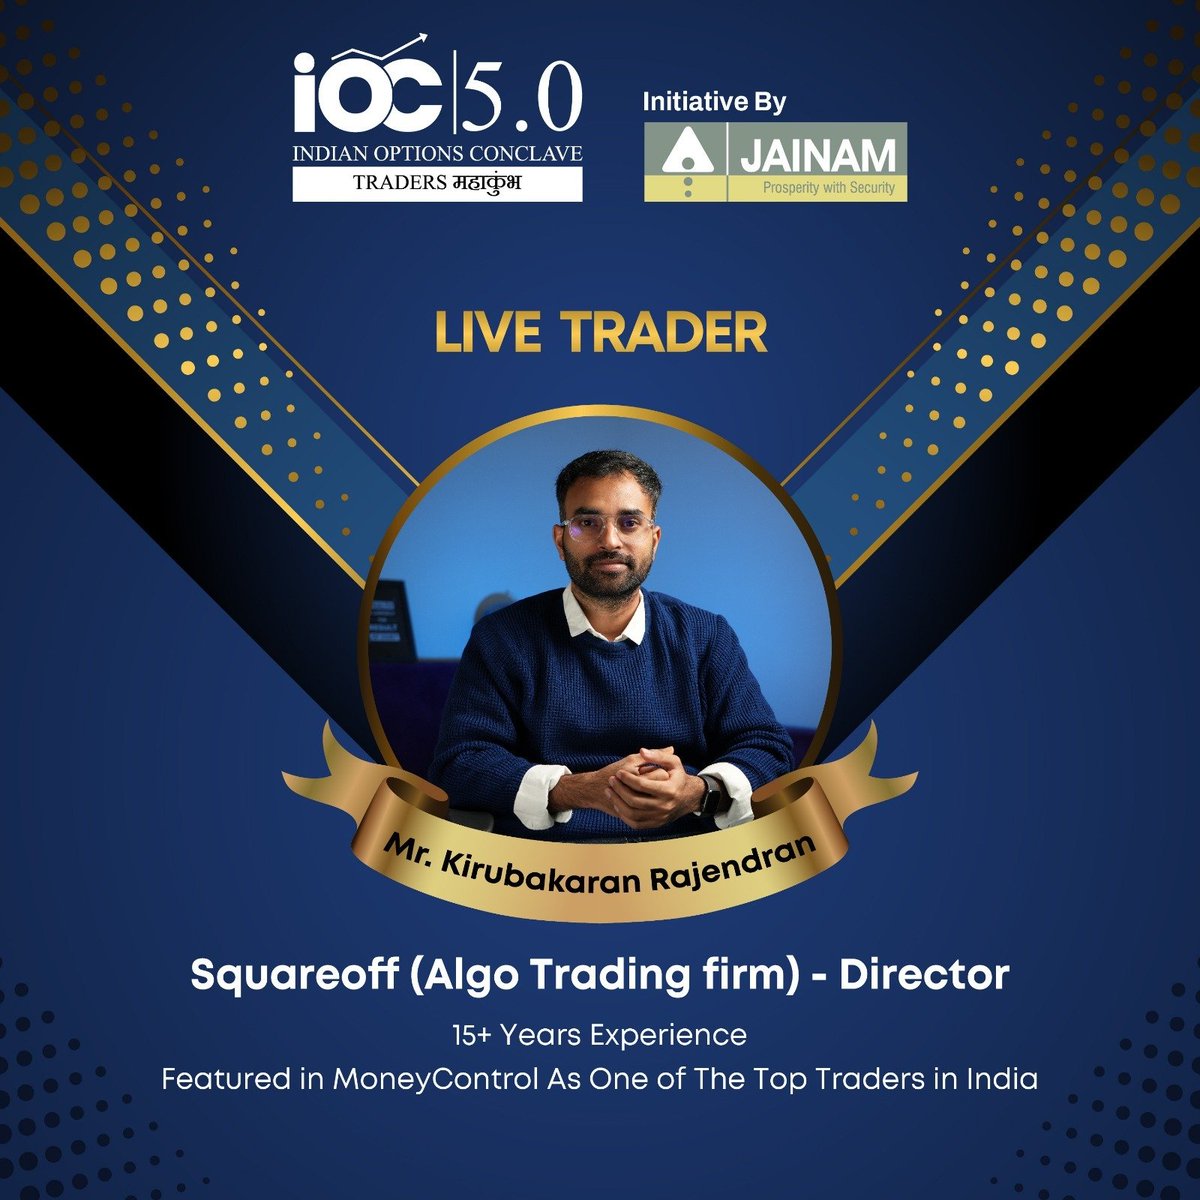 Kirubakaran Rajendran is the founder of Squareoff, an algo trading firm.
𝐉𝐨𝐢𝐧 𝐮𝐬 𝐟𝐨𝐫 𝐈𝐎𝐂 𝟓.𝟎 -𝟏𝟓&𝟏𝟔  𝐌𝐚𝐫𝐜𝐡 @ 𝐘𝐏𝐃,𝐖𝐨𝐫𝐥𝐝 𝐂𝐨𝐧𝐯𝐞𝐧𝐭𝐢𝐨𝐧 𝐂𝐞𝐧𝐭𝐫𝐞  Register now: go.jainamioc.in/x